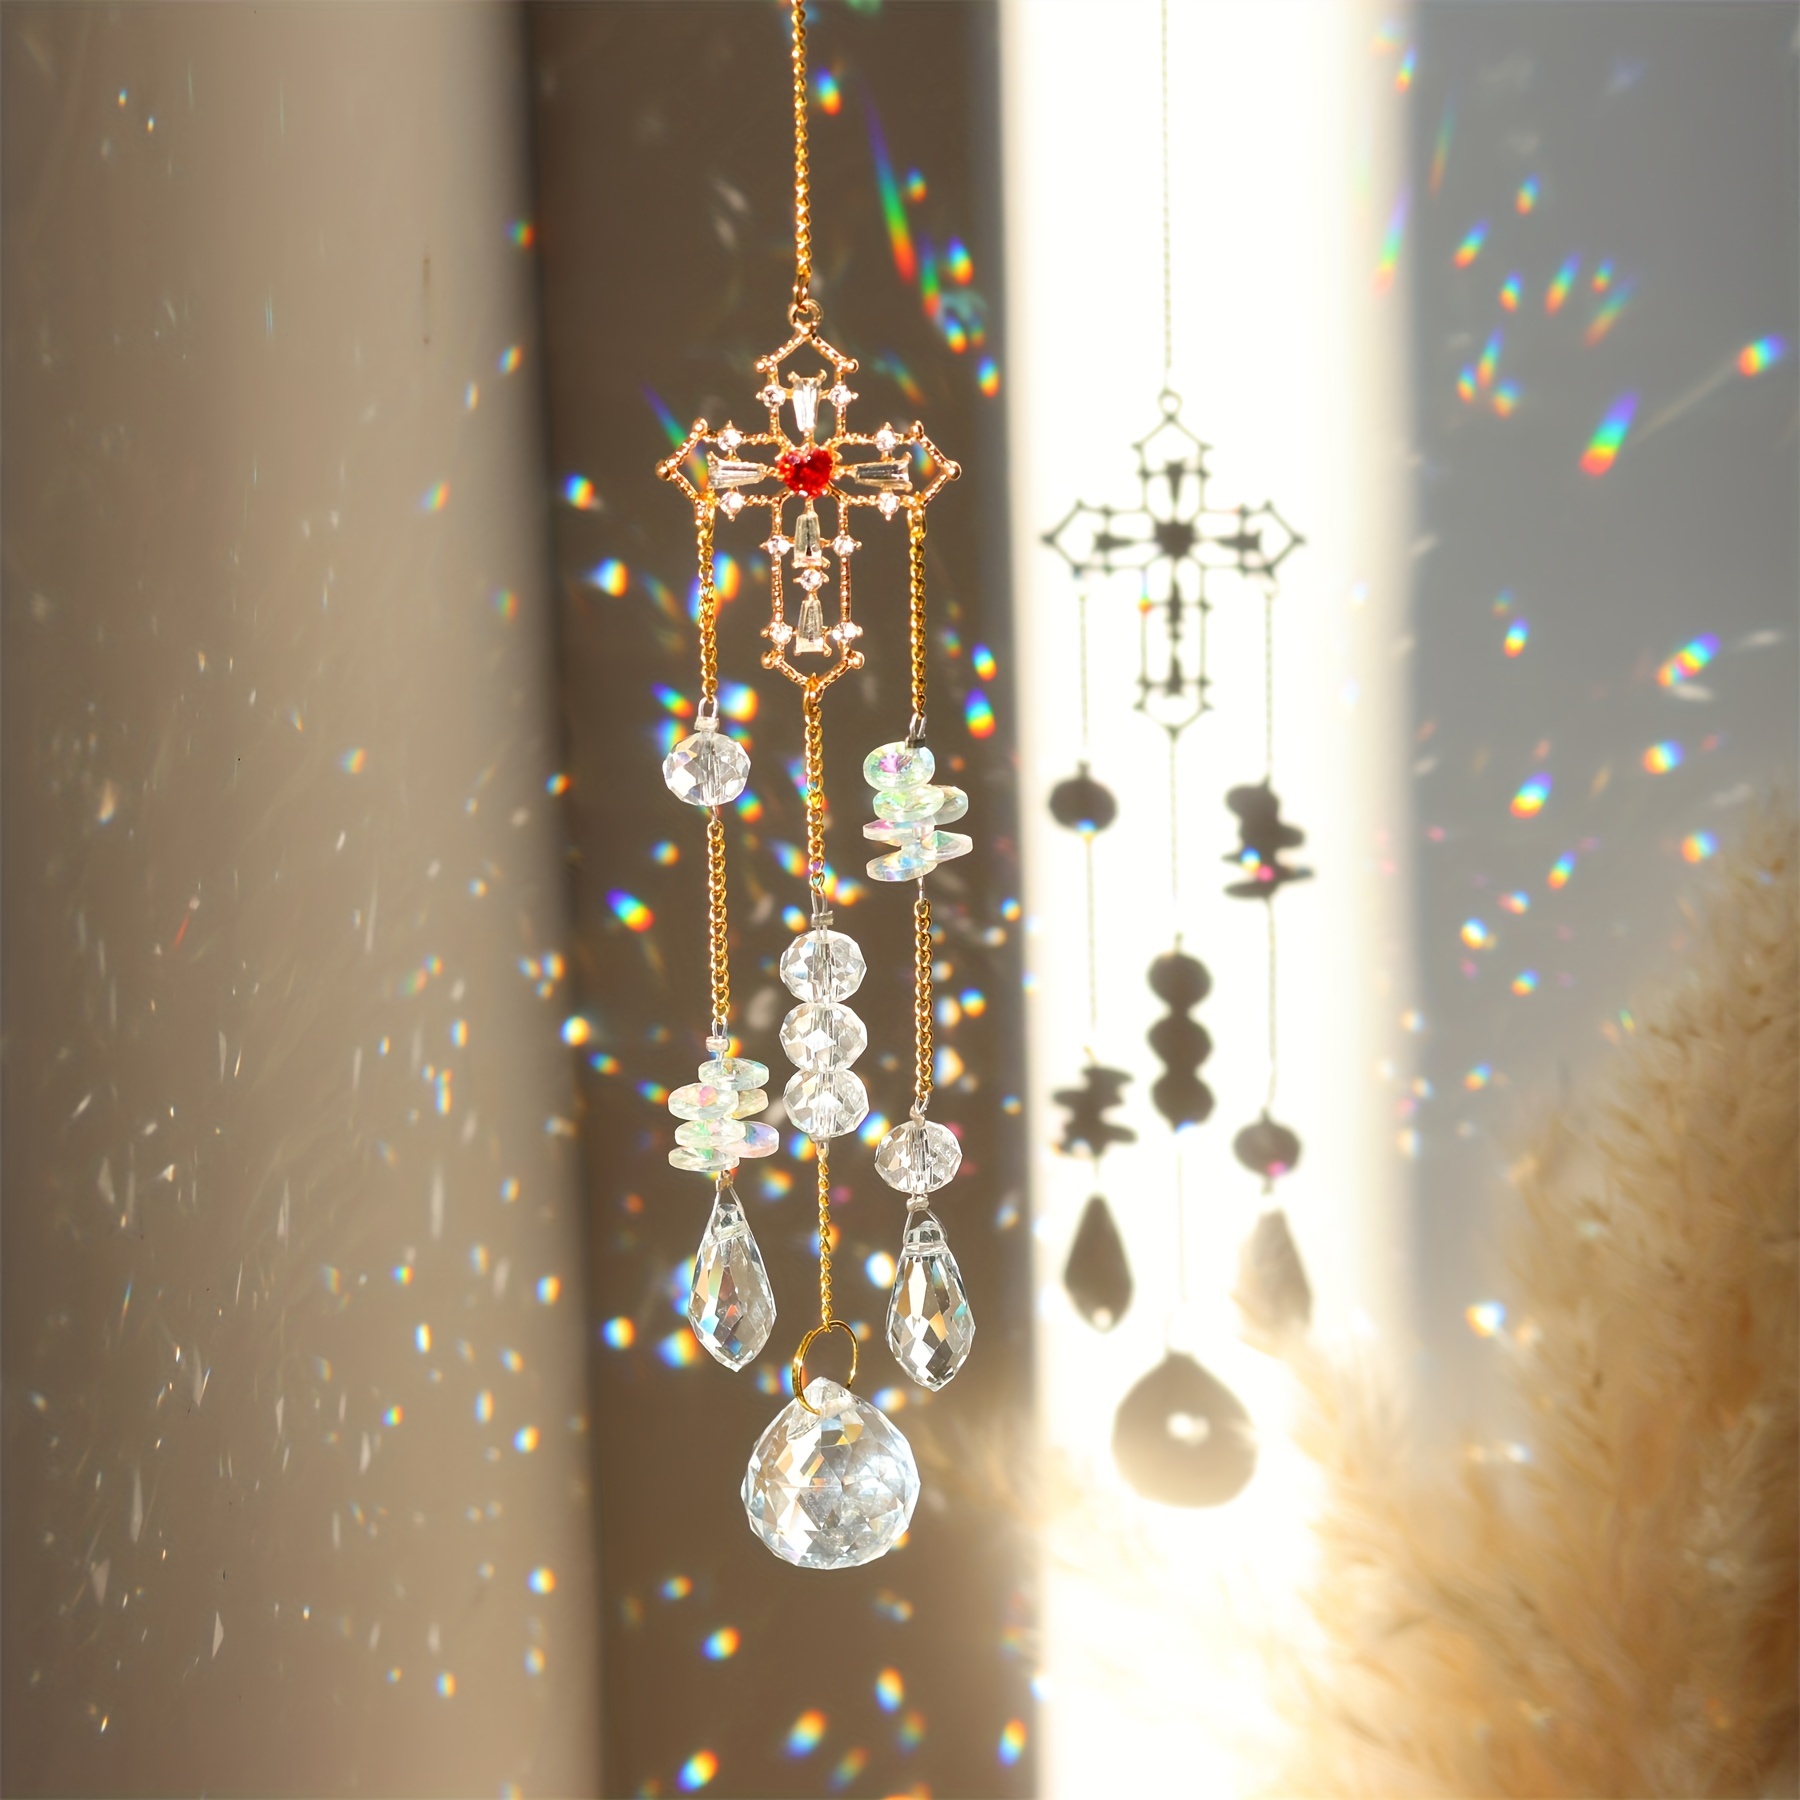  5PCS Crystal Suncatcher Rainbow Sun Catchers Indoor Window  Colorful Hanging Crystals Beads or Windows Crystal Balls Prisms Pendant  Light Ornament Christmas Wedding Garden Decoration : Patio, Lawn & Garden